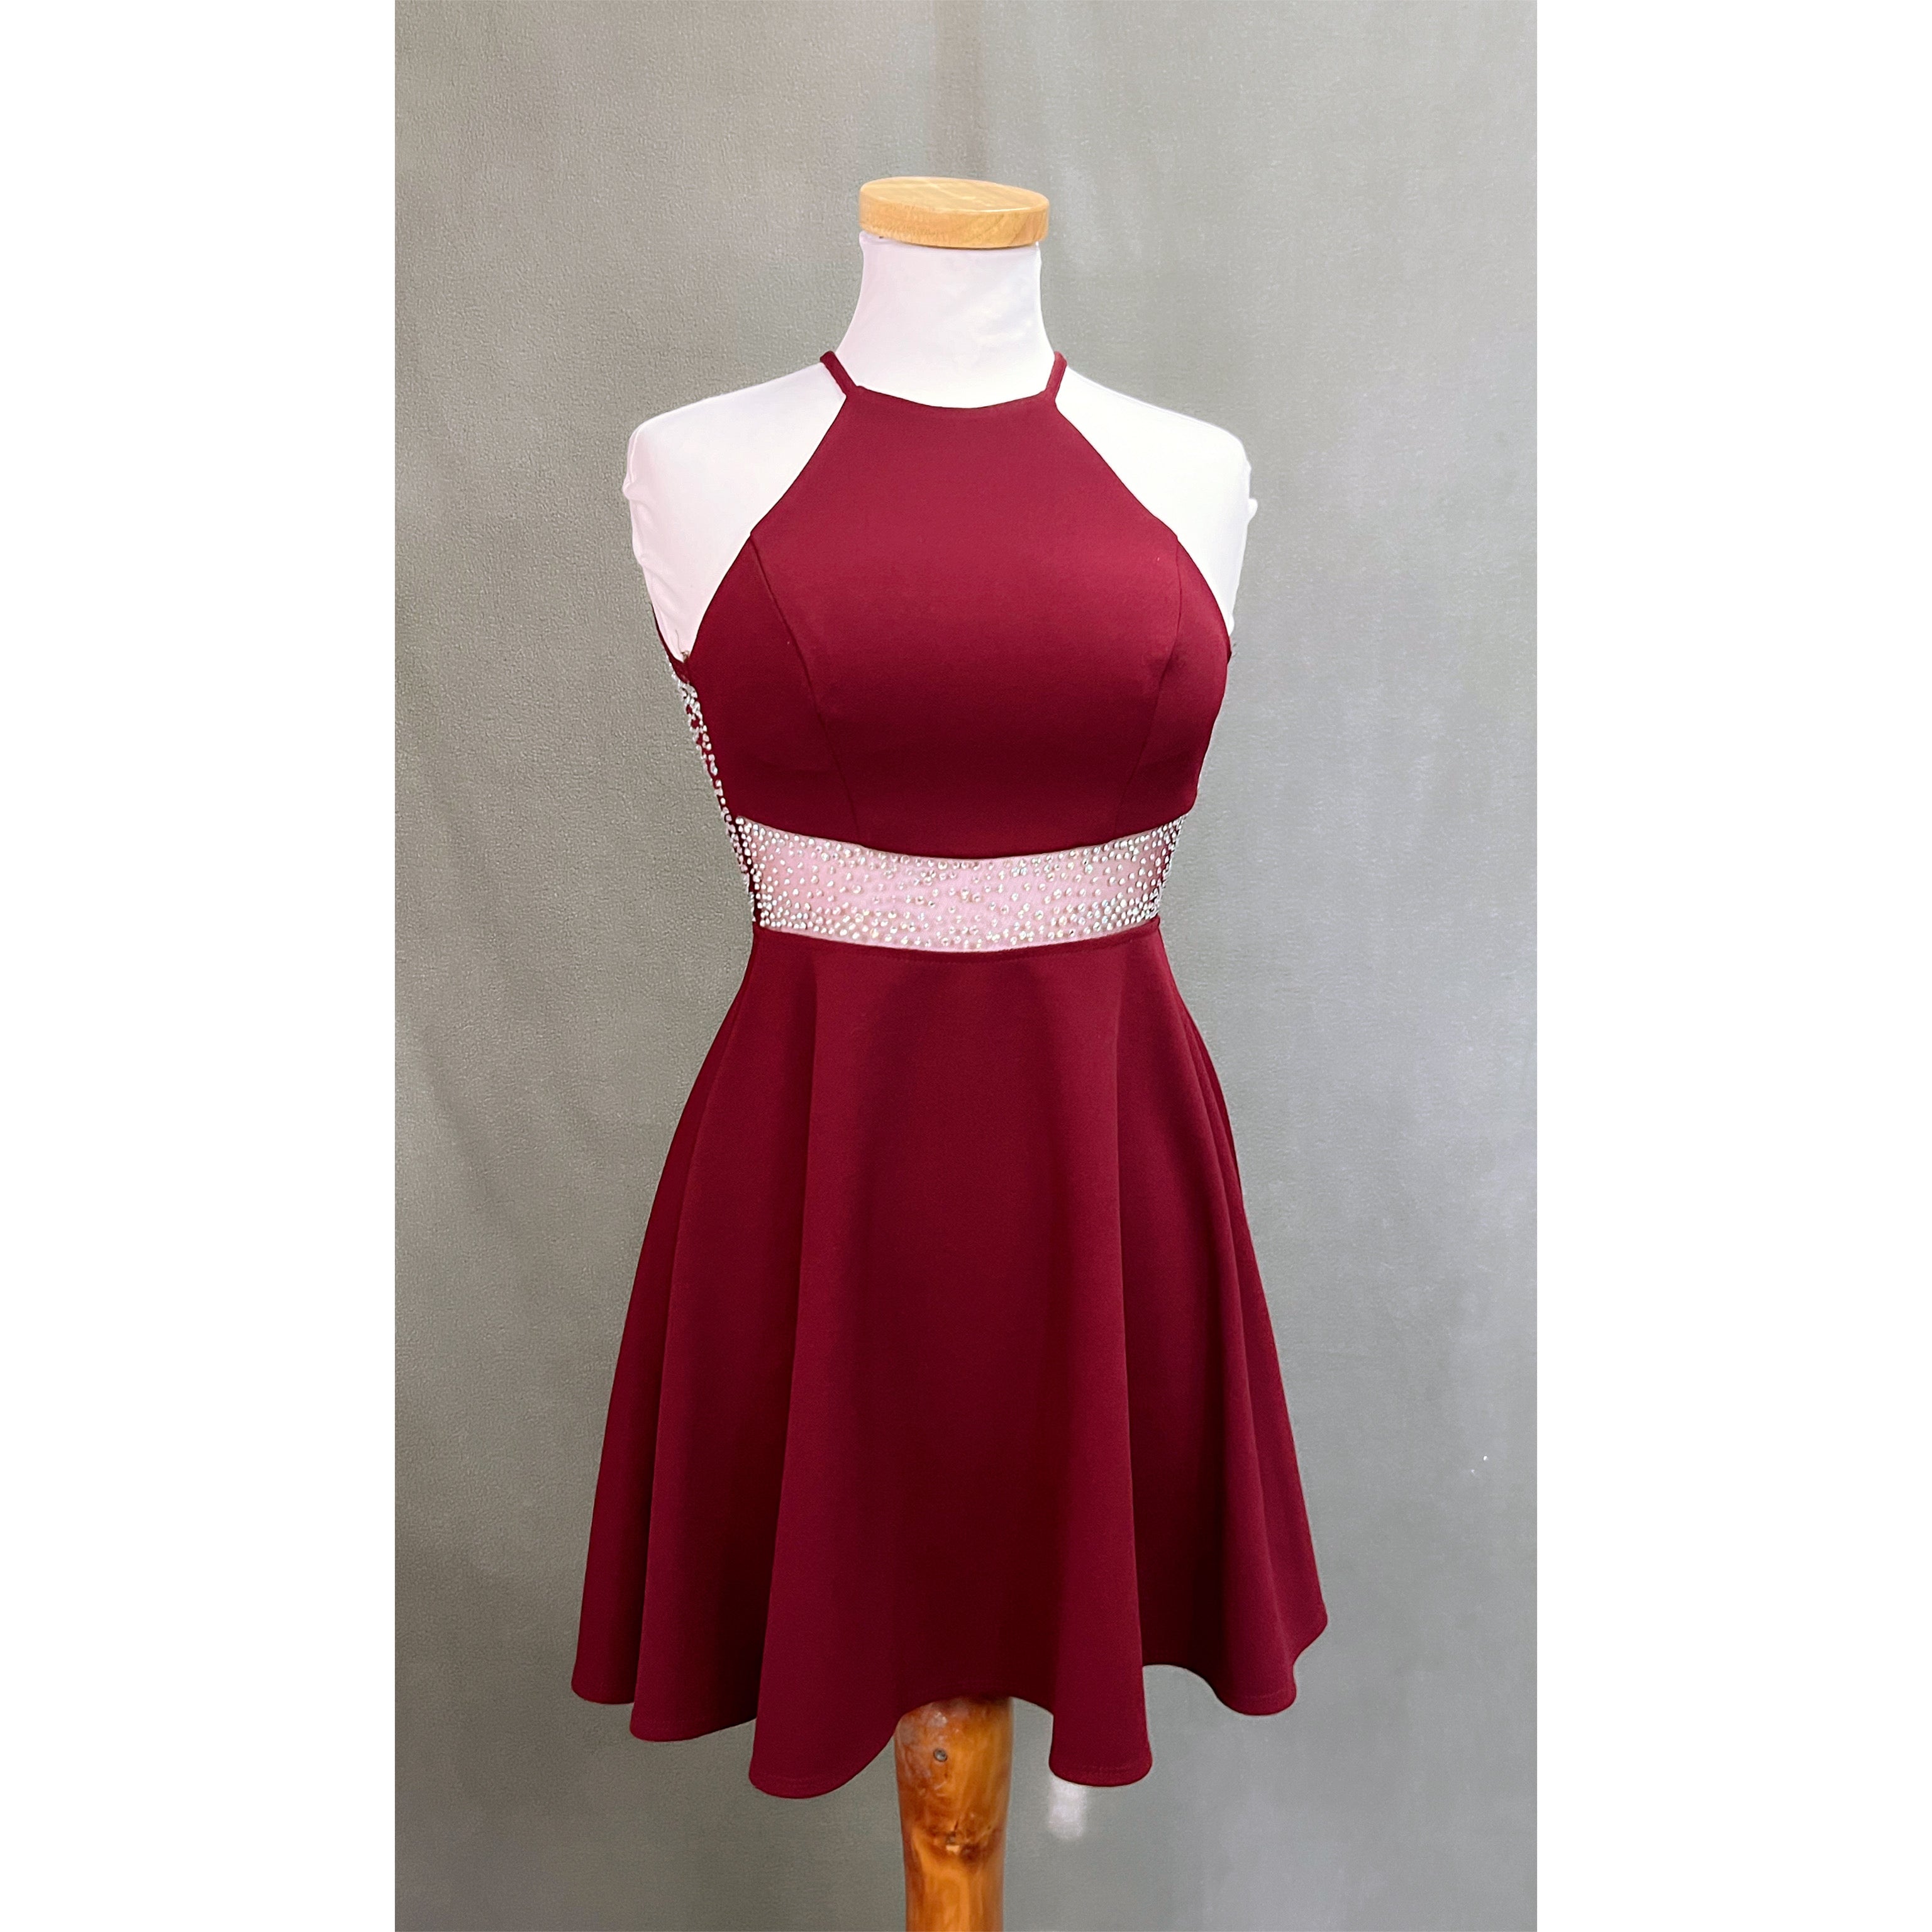 Speechless burgundy dress, size 1